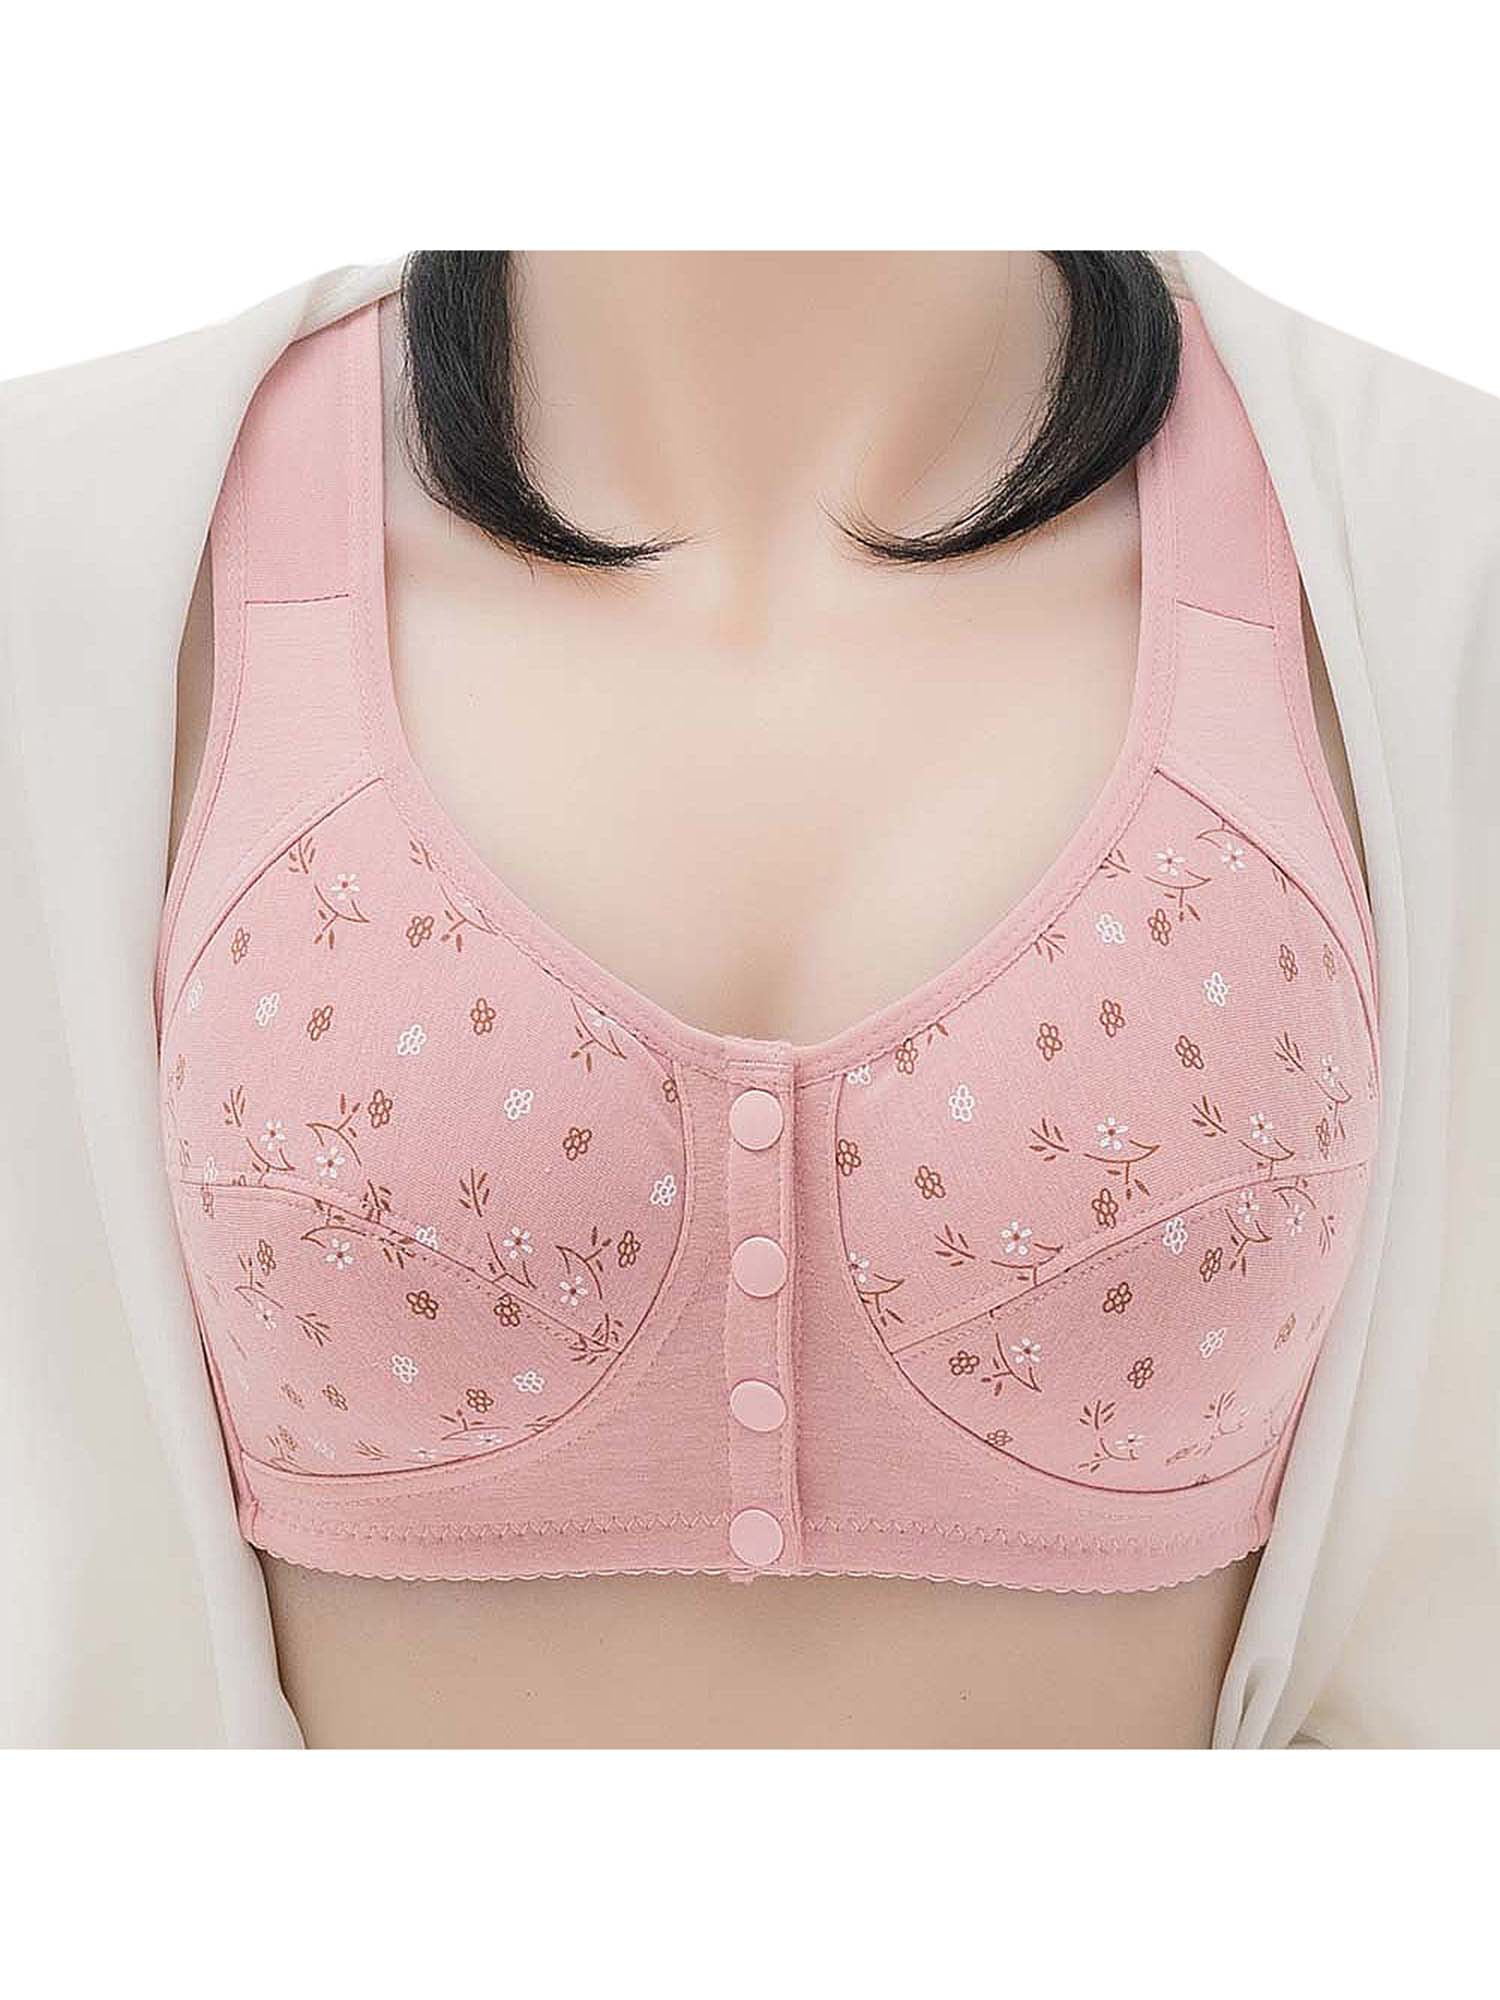 Womens Bra Full Cup Thin Underwear Plus Size Wireless Adjustable Bras,B,36 80 Pink 